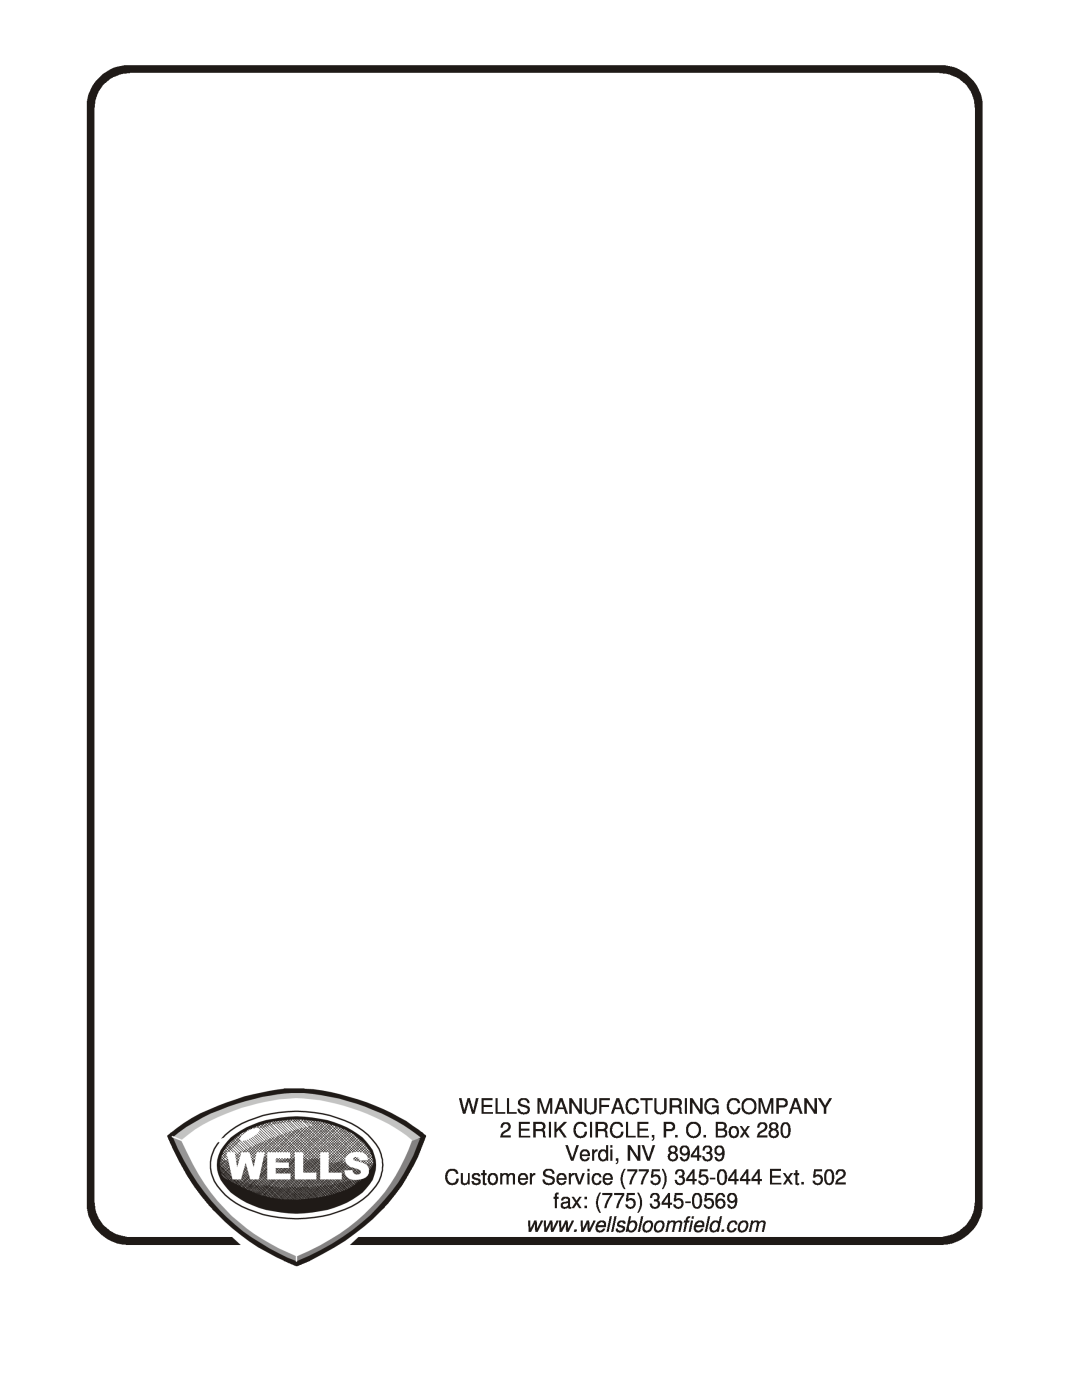 Bloomfield WFPE-30F WELLS MANUFACTURING COMPANY 2 ERIK CIRCLE, P. O. Box Verdi, NV, Customer Service 775 345-0444 Ext fax 